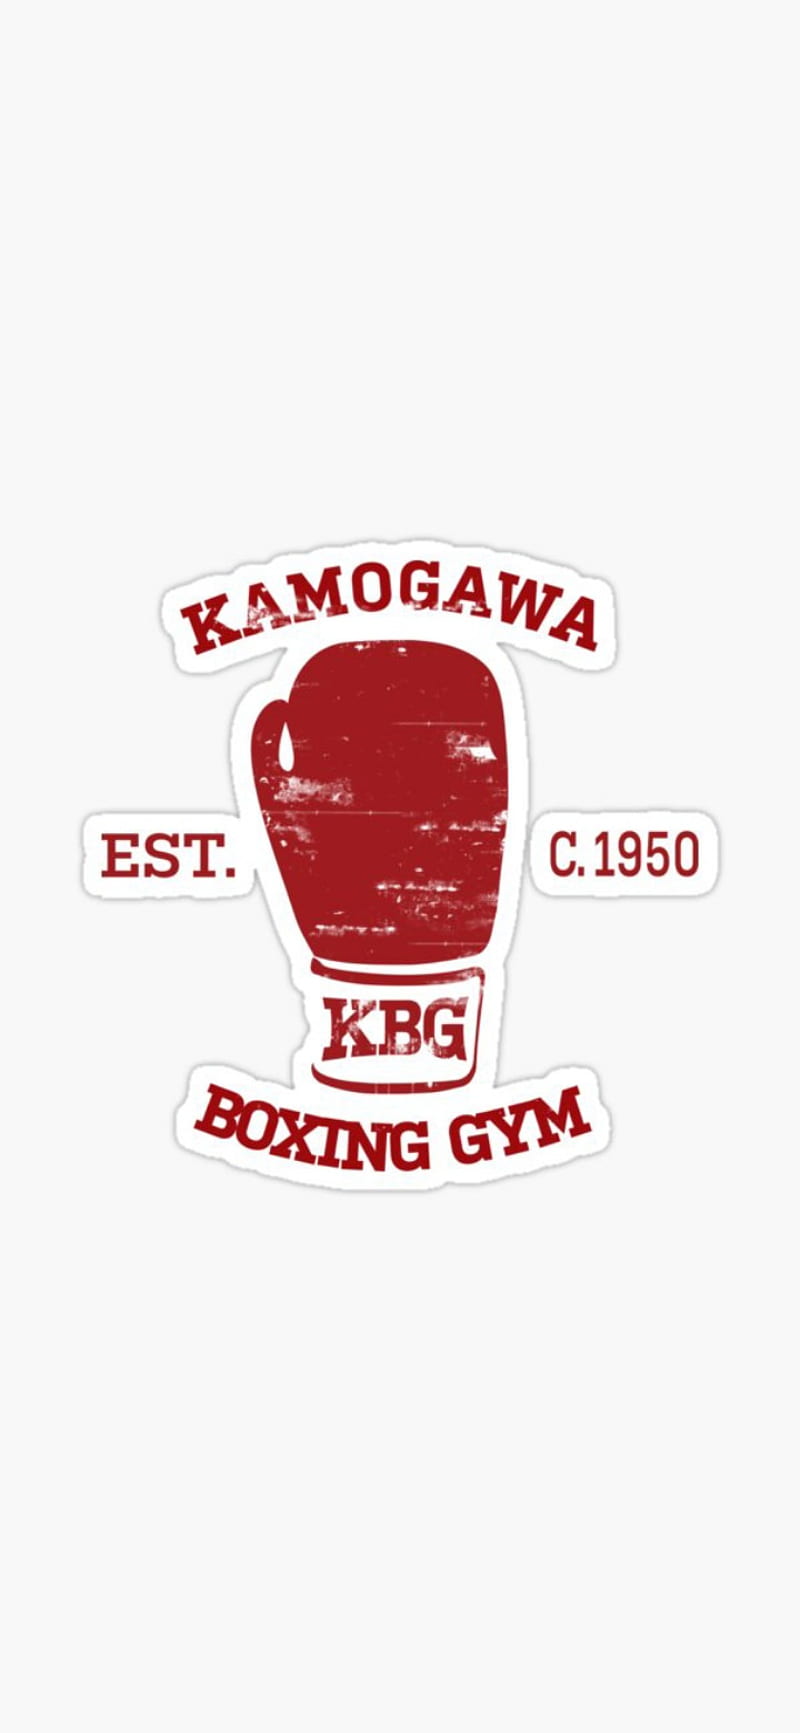 Hajime No Ippo Makunouchi Kamogawa Boxing Gym Anime Poster for